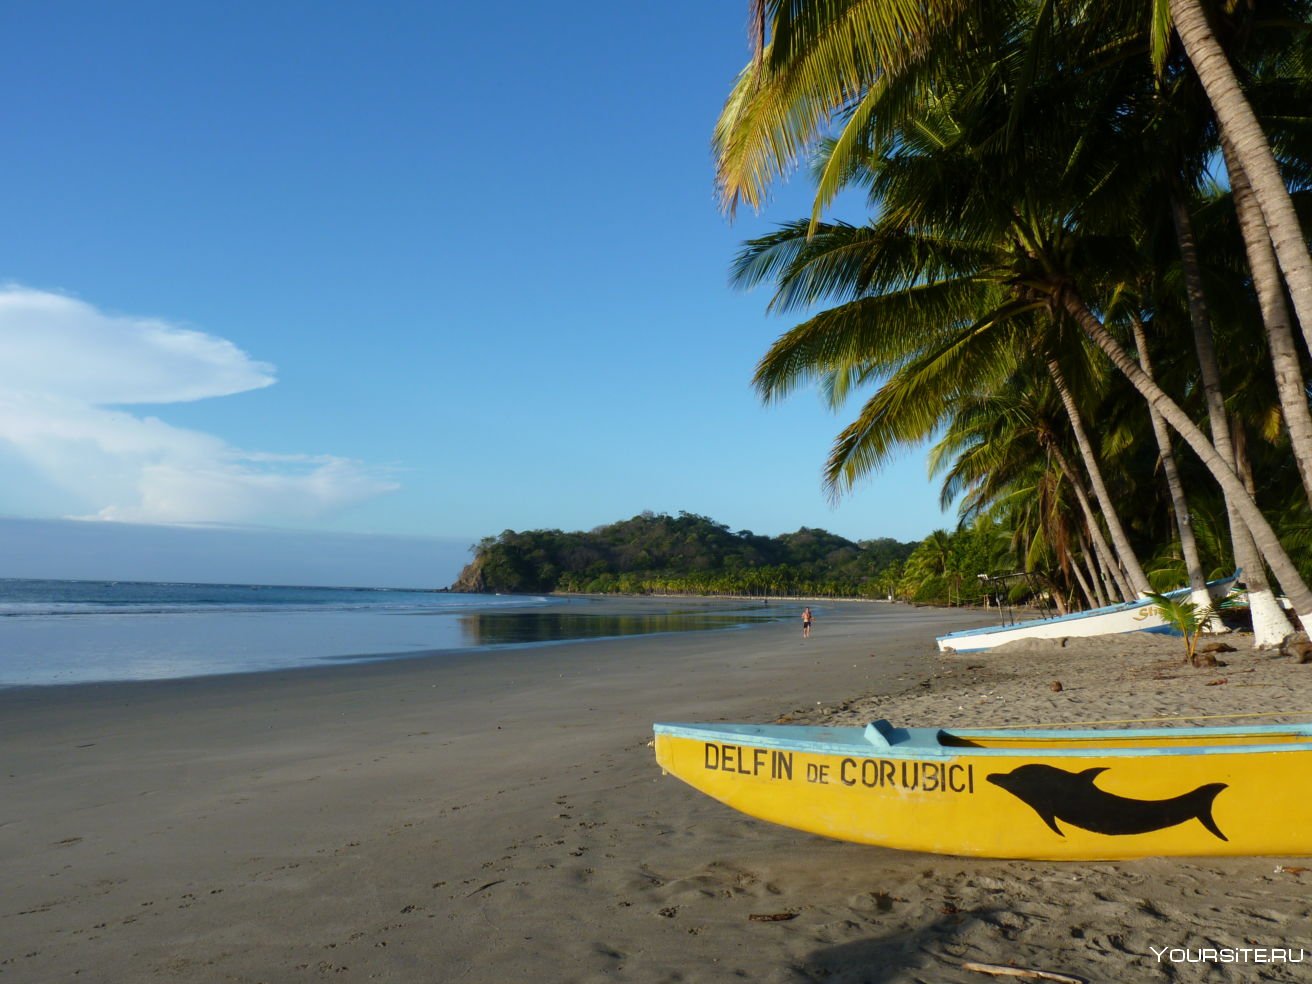 En costa. Коста Рика пляжи. Пляжи Коста Рики. Коста Рика туризм. Коста Рика побережье.